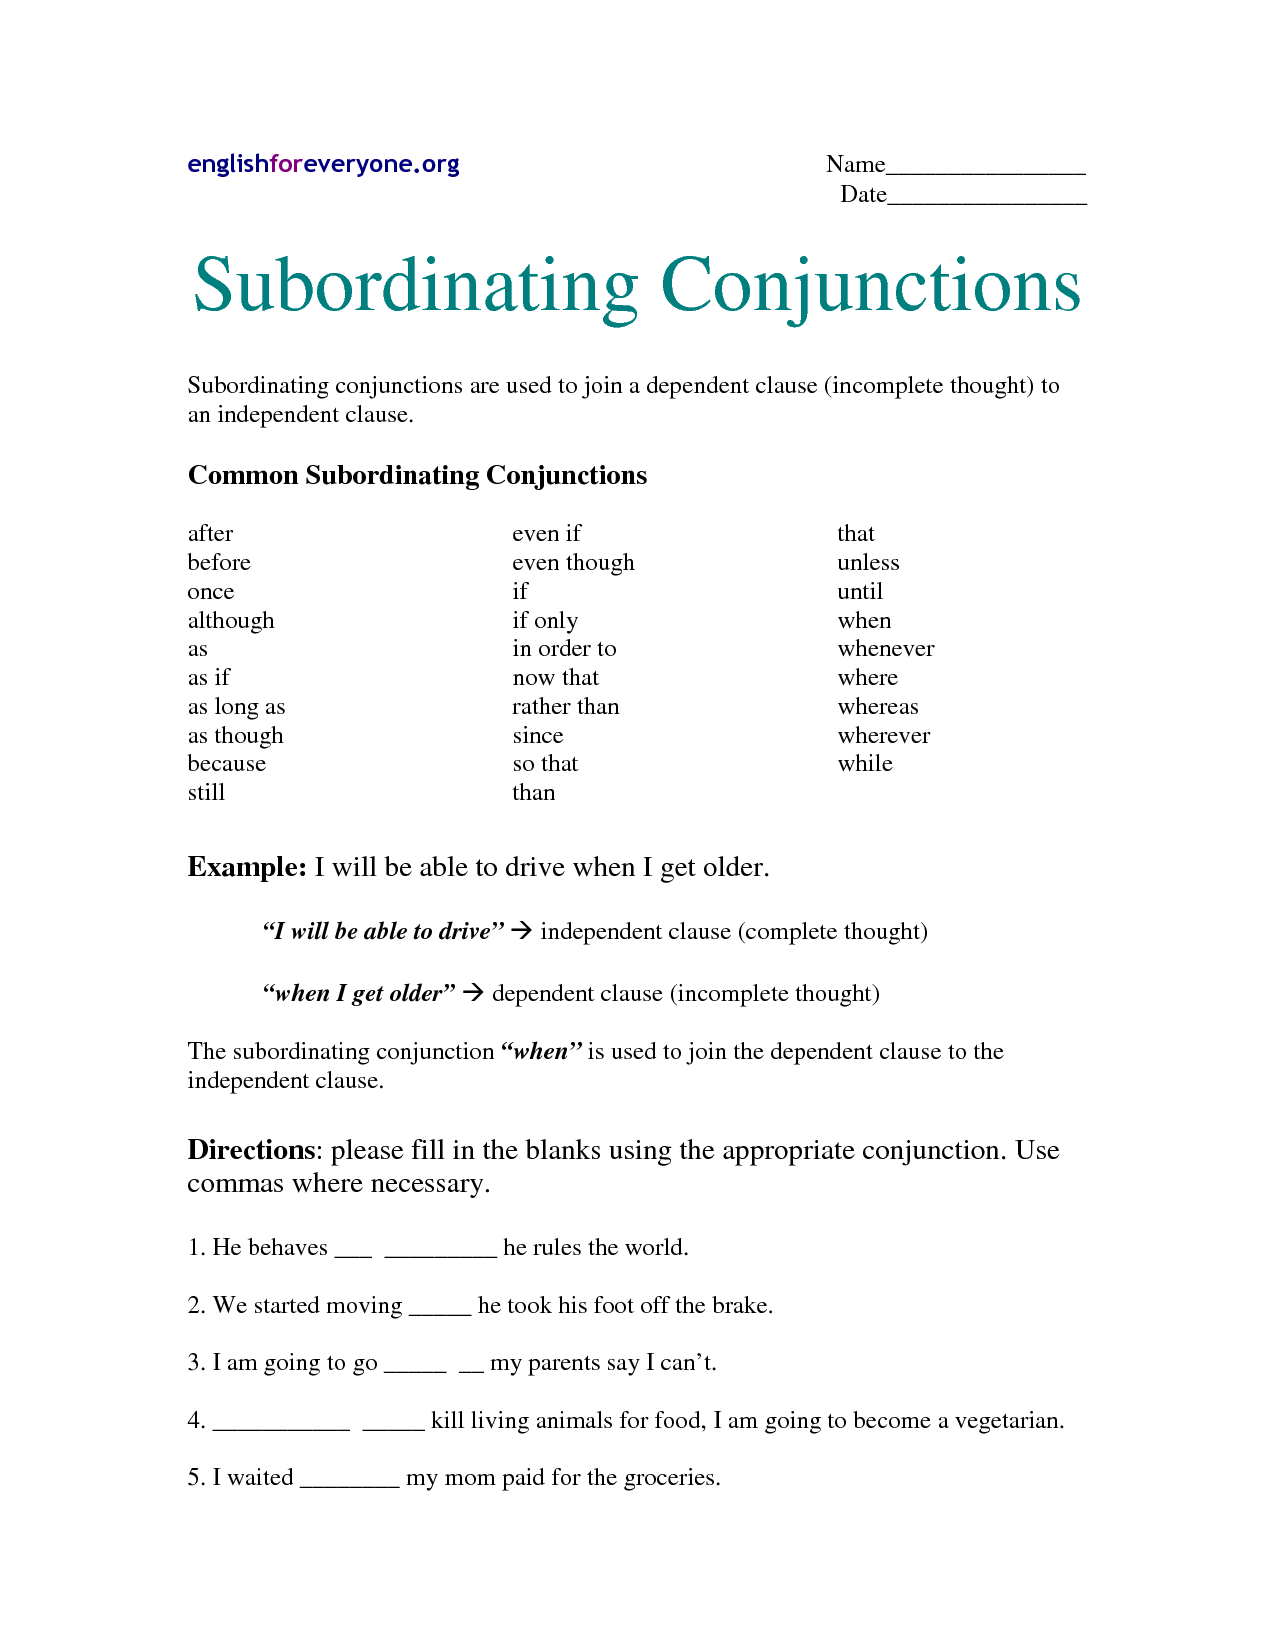 correlative-conjunctions-in-english-english-study-here-correlative-conjunctions-english